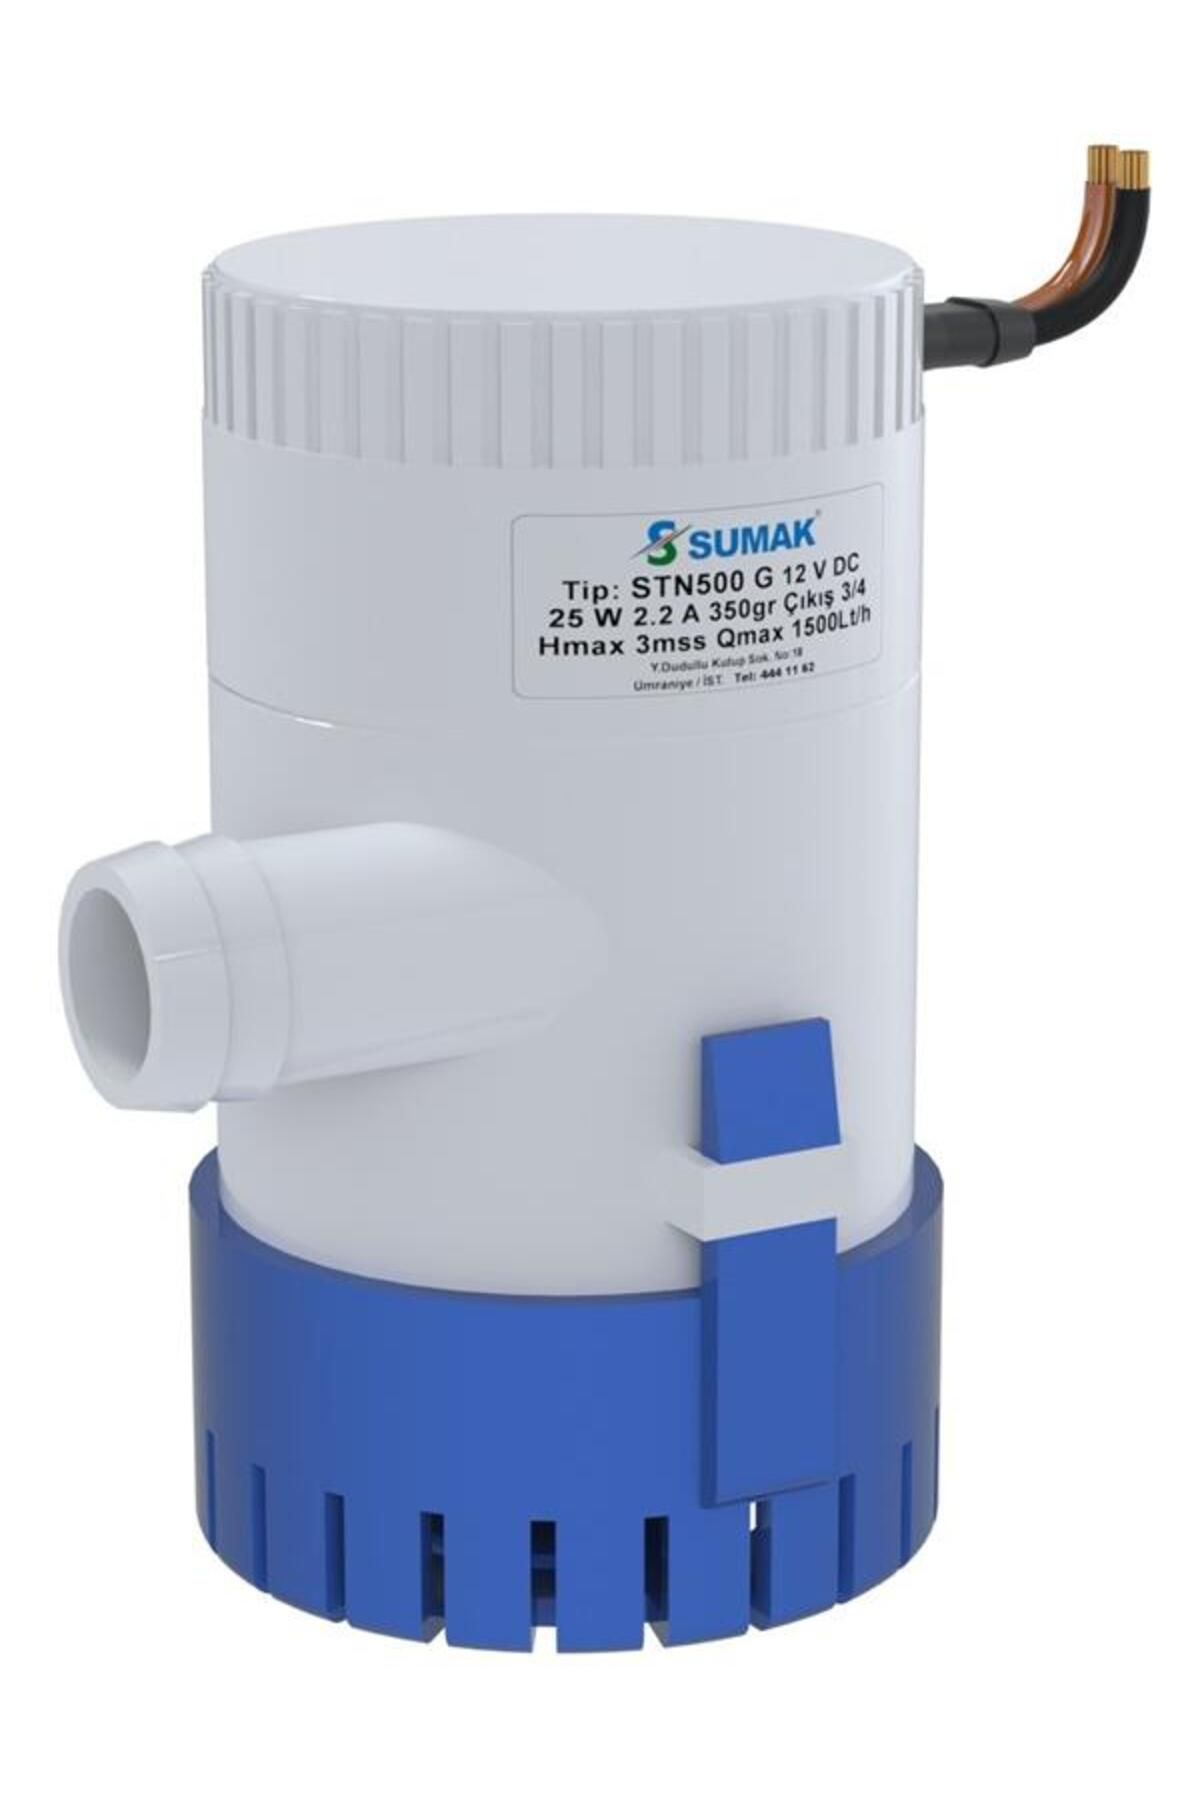 Sumak Sumak STN500G Sintine Dalgıç Pompa 3 mss 1500 litre/h 12 VOLT -Manuel-